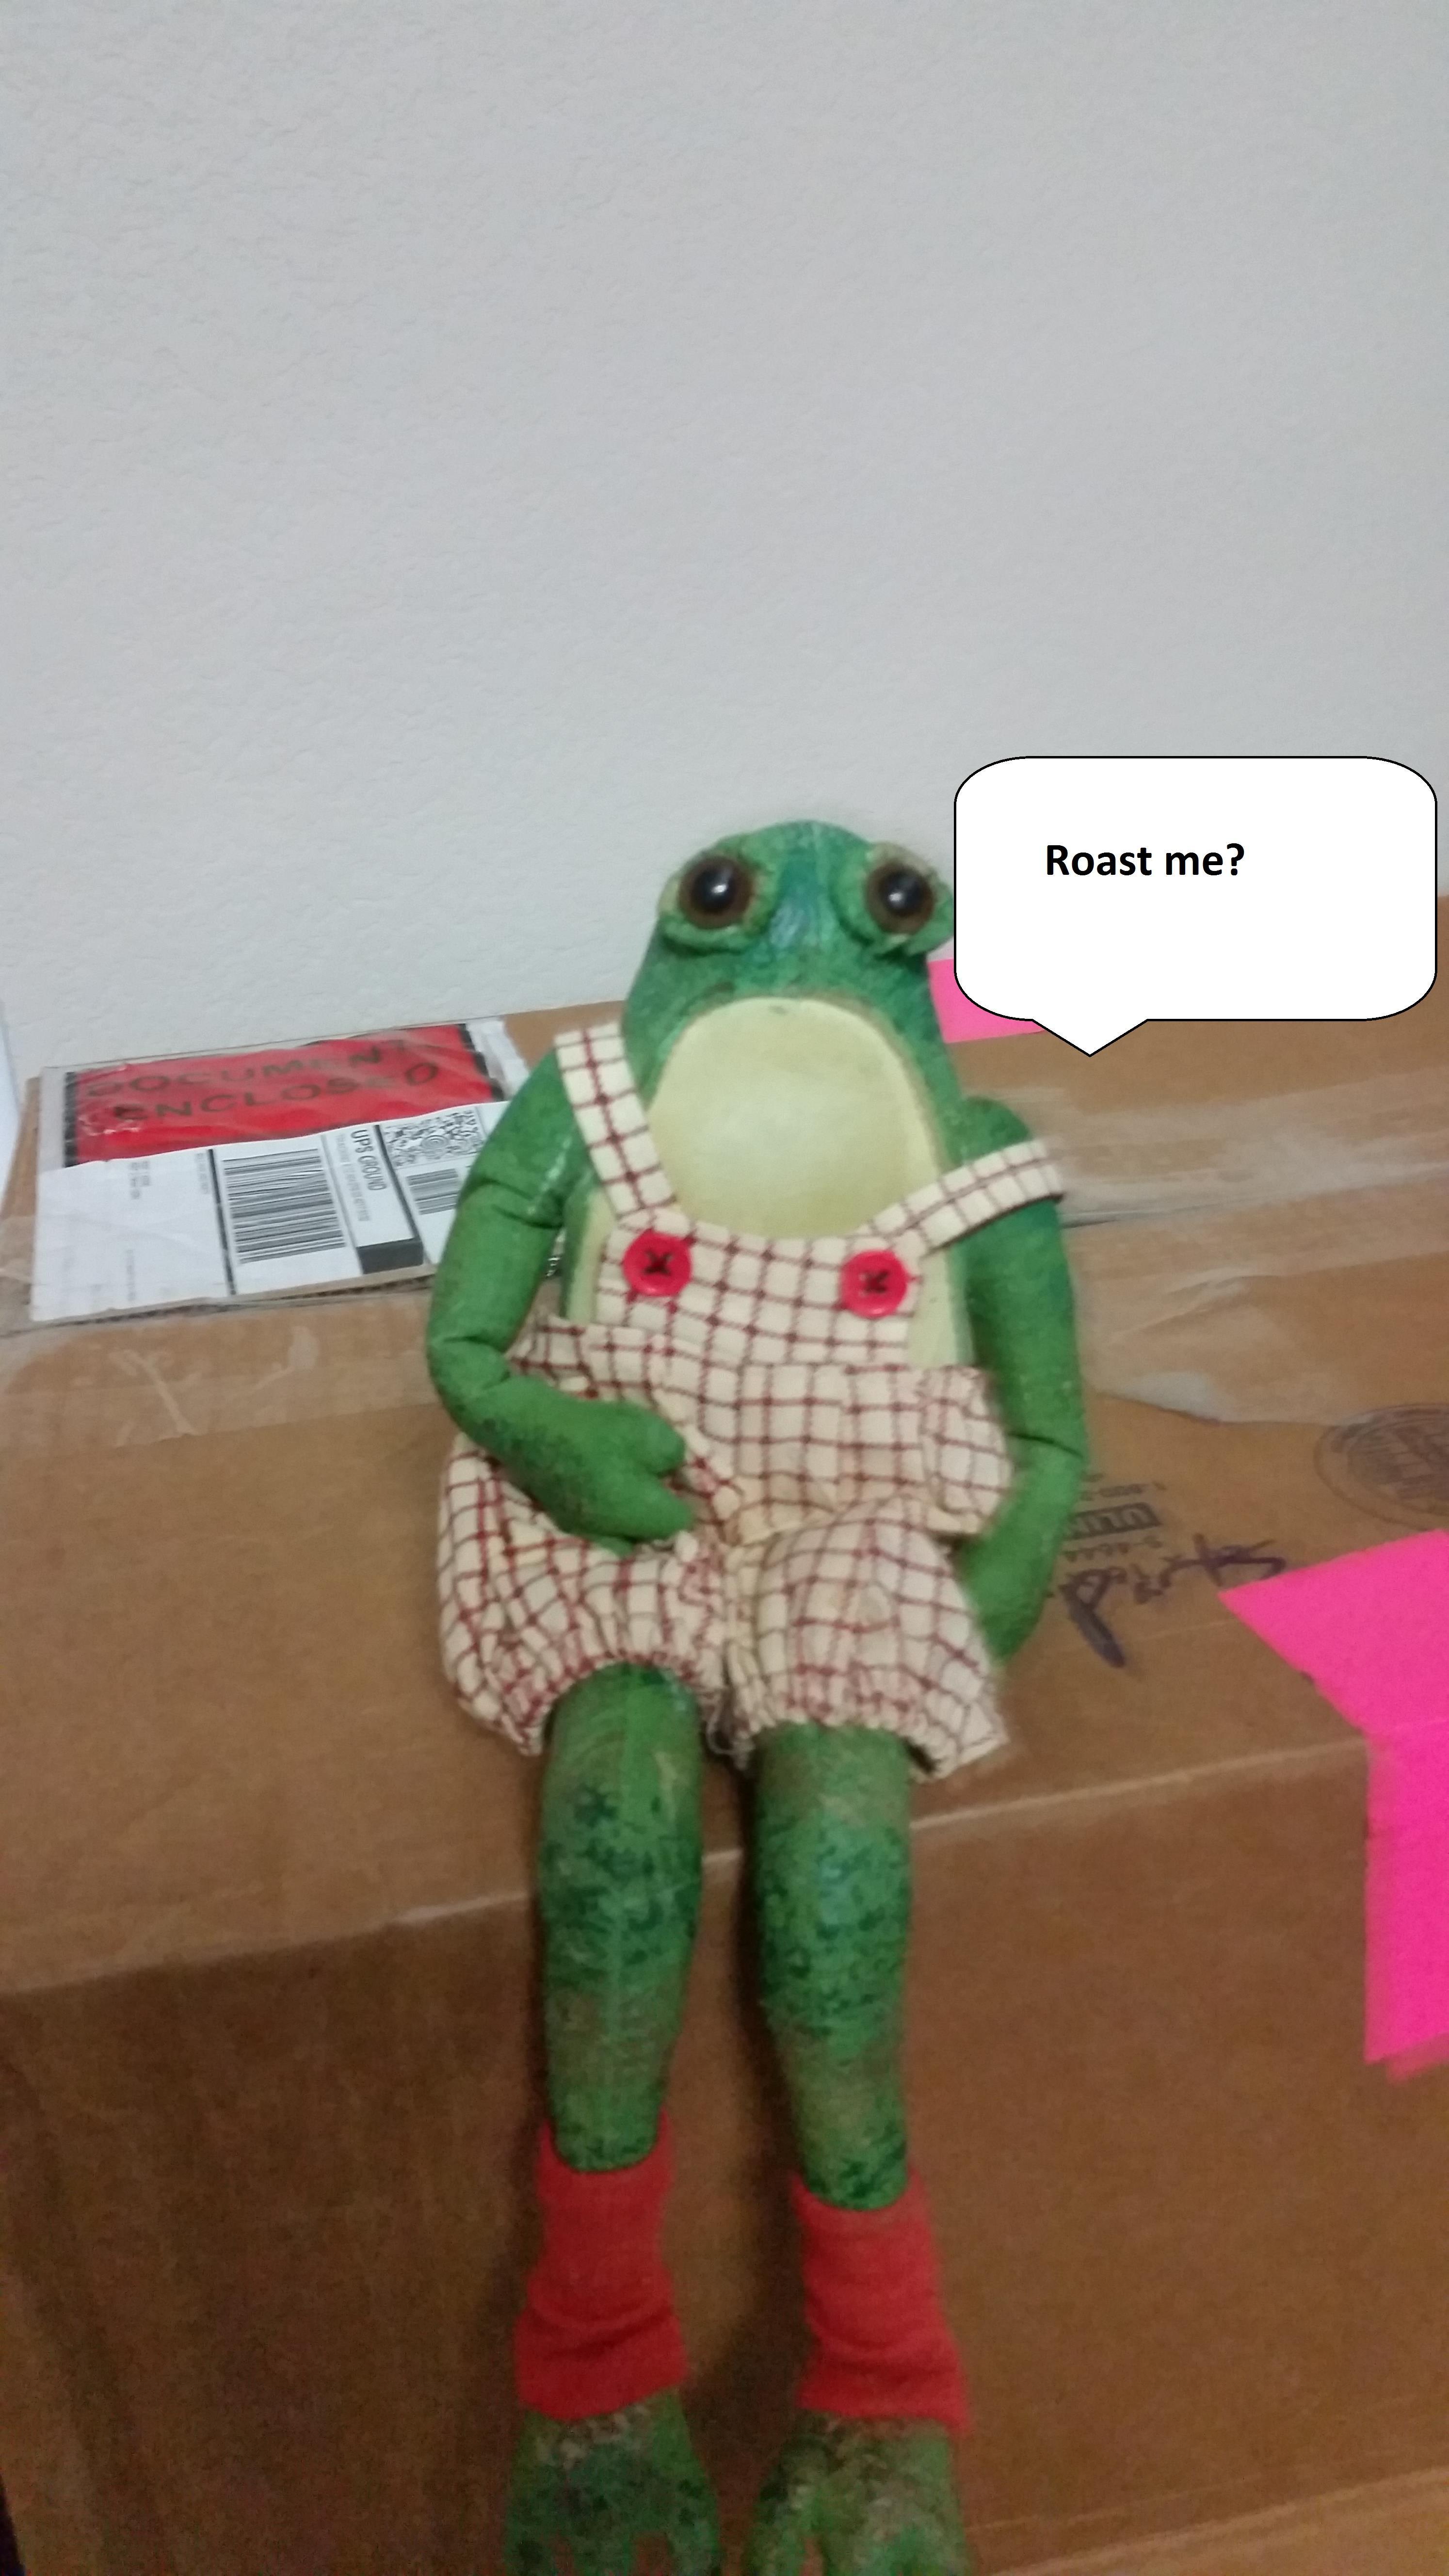 stuffed toy - Roast me?